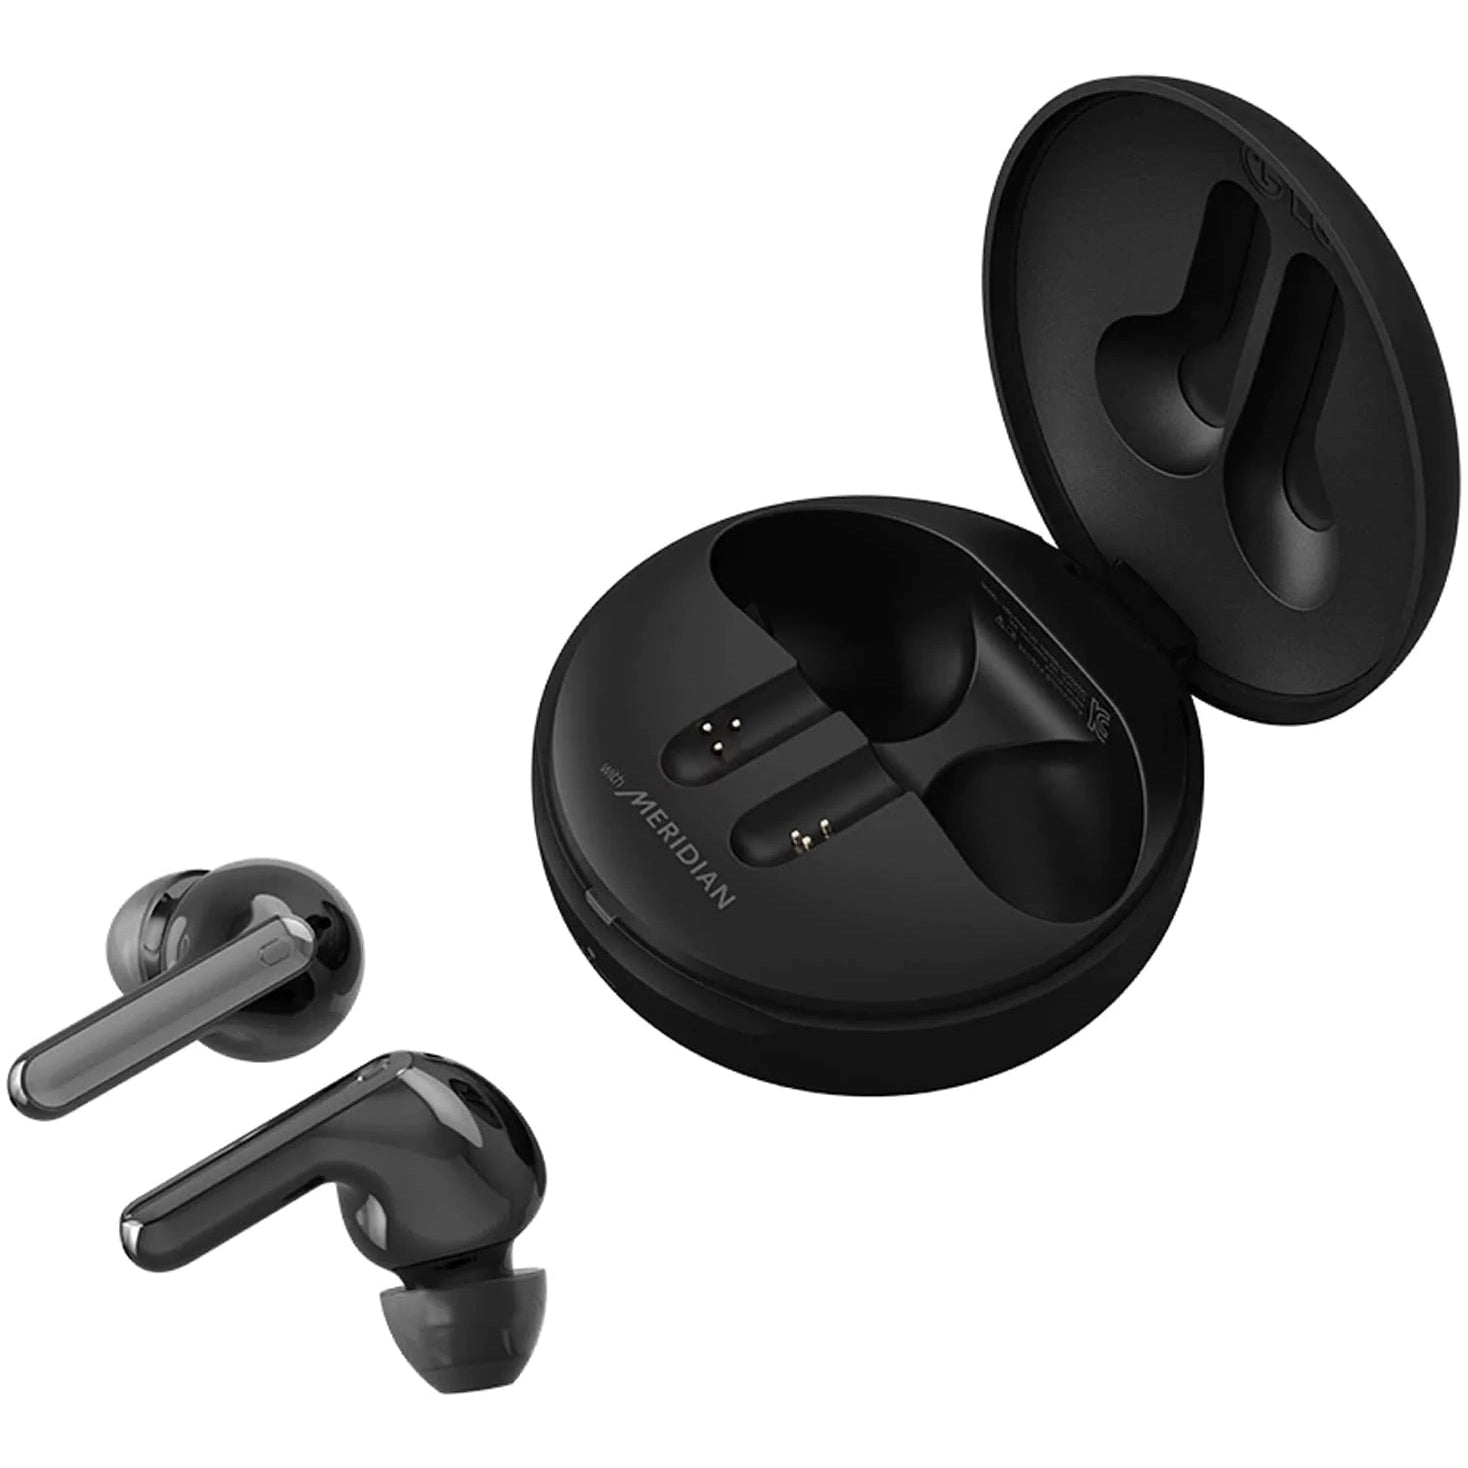 LG TONE Free HBS-FN7 True Wireless Earbuds - Refurbished Pristine